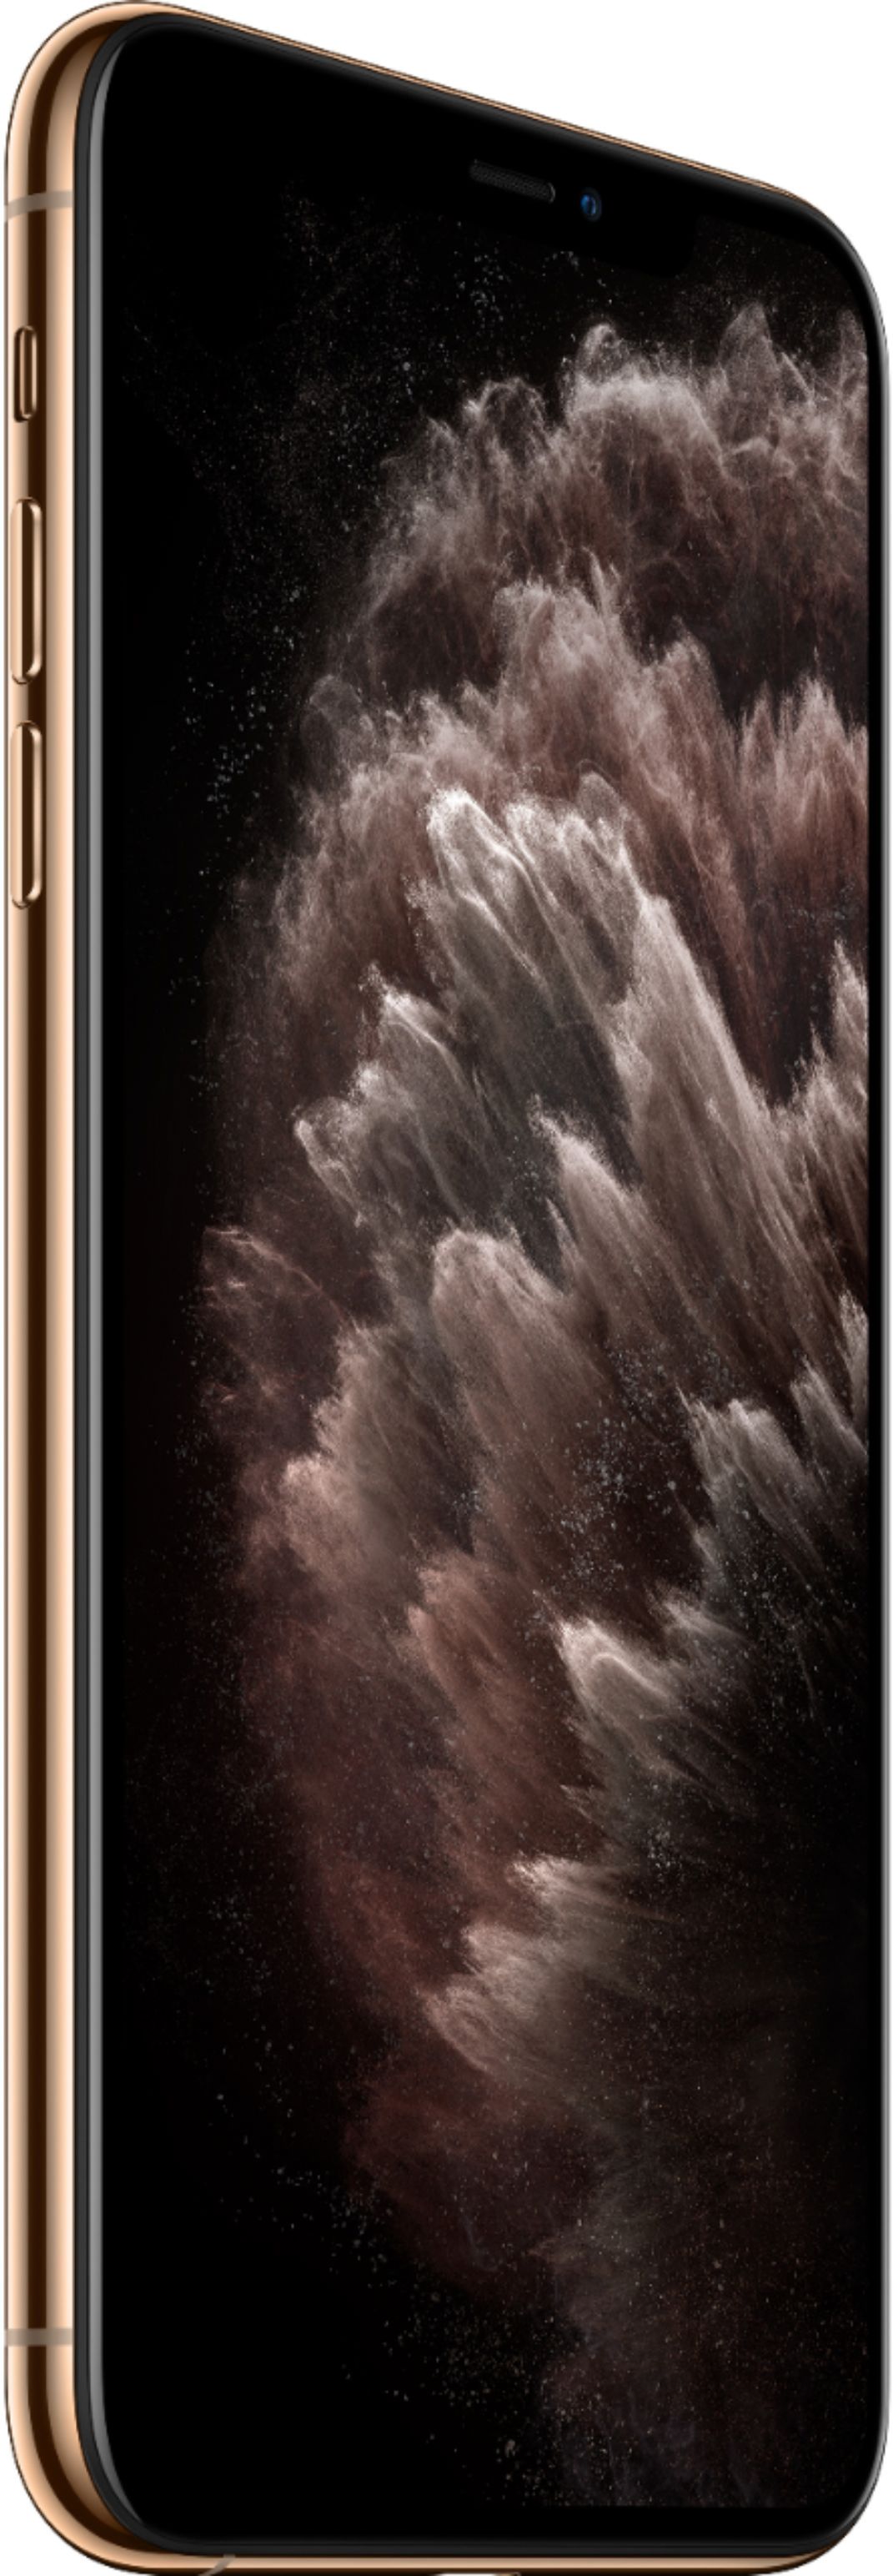 Apple iPhone 11 Pro Max 64GB Gold (Verizon) MWH12LL/A - Best Buy